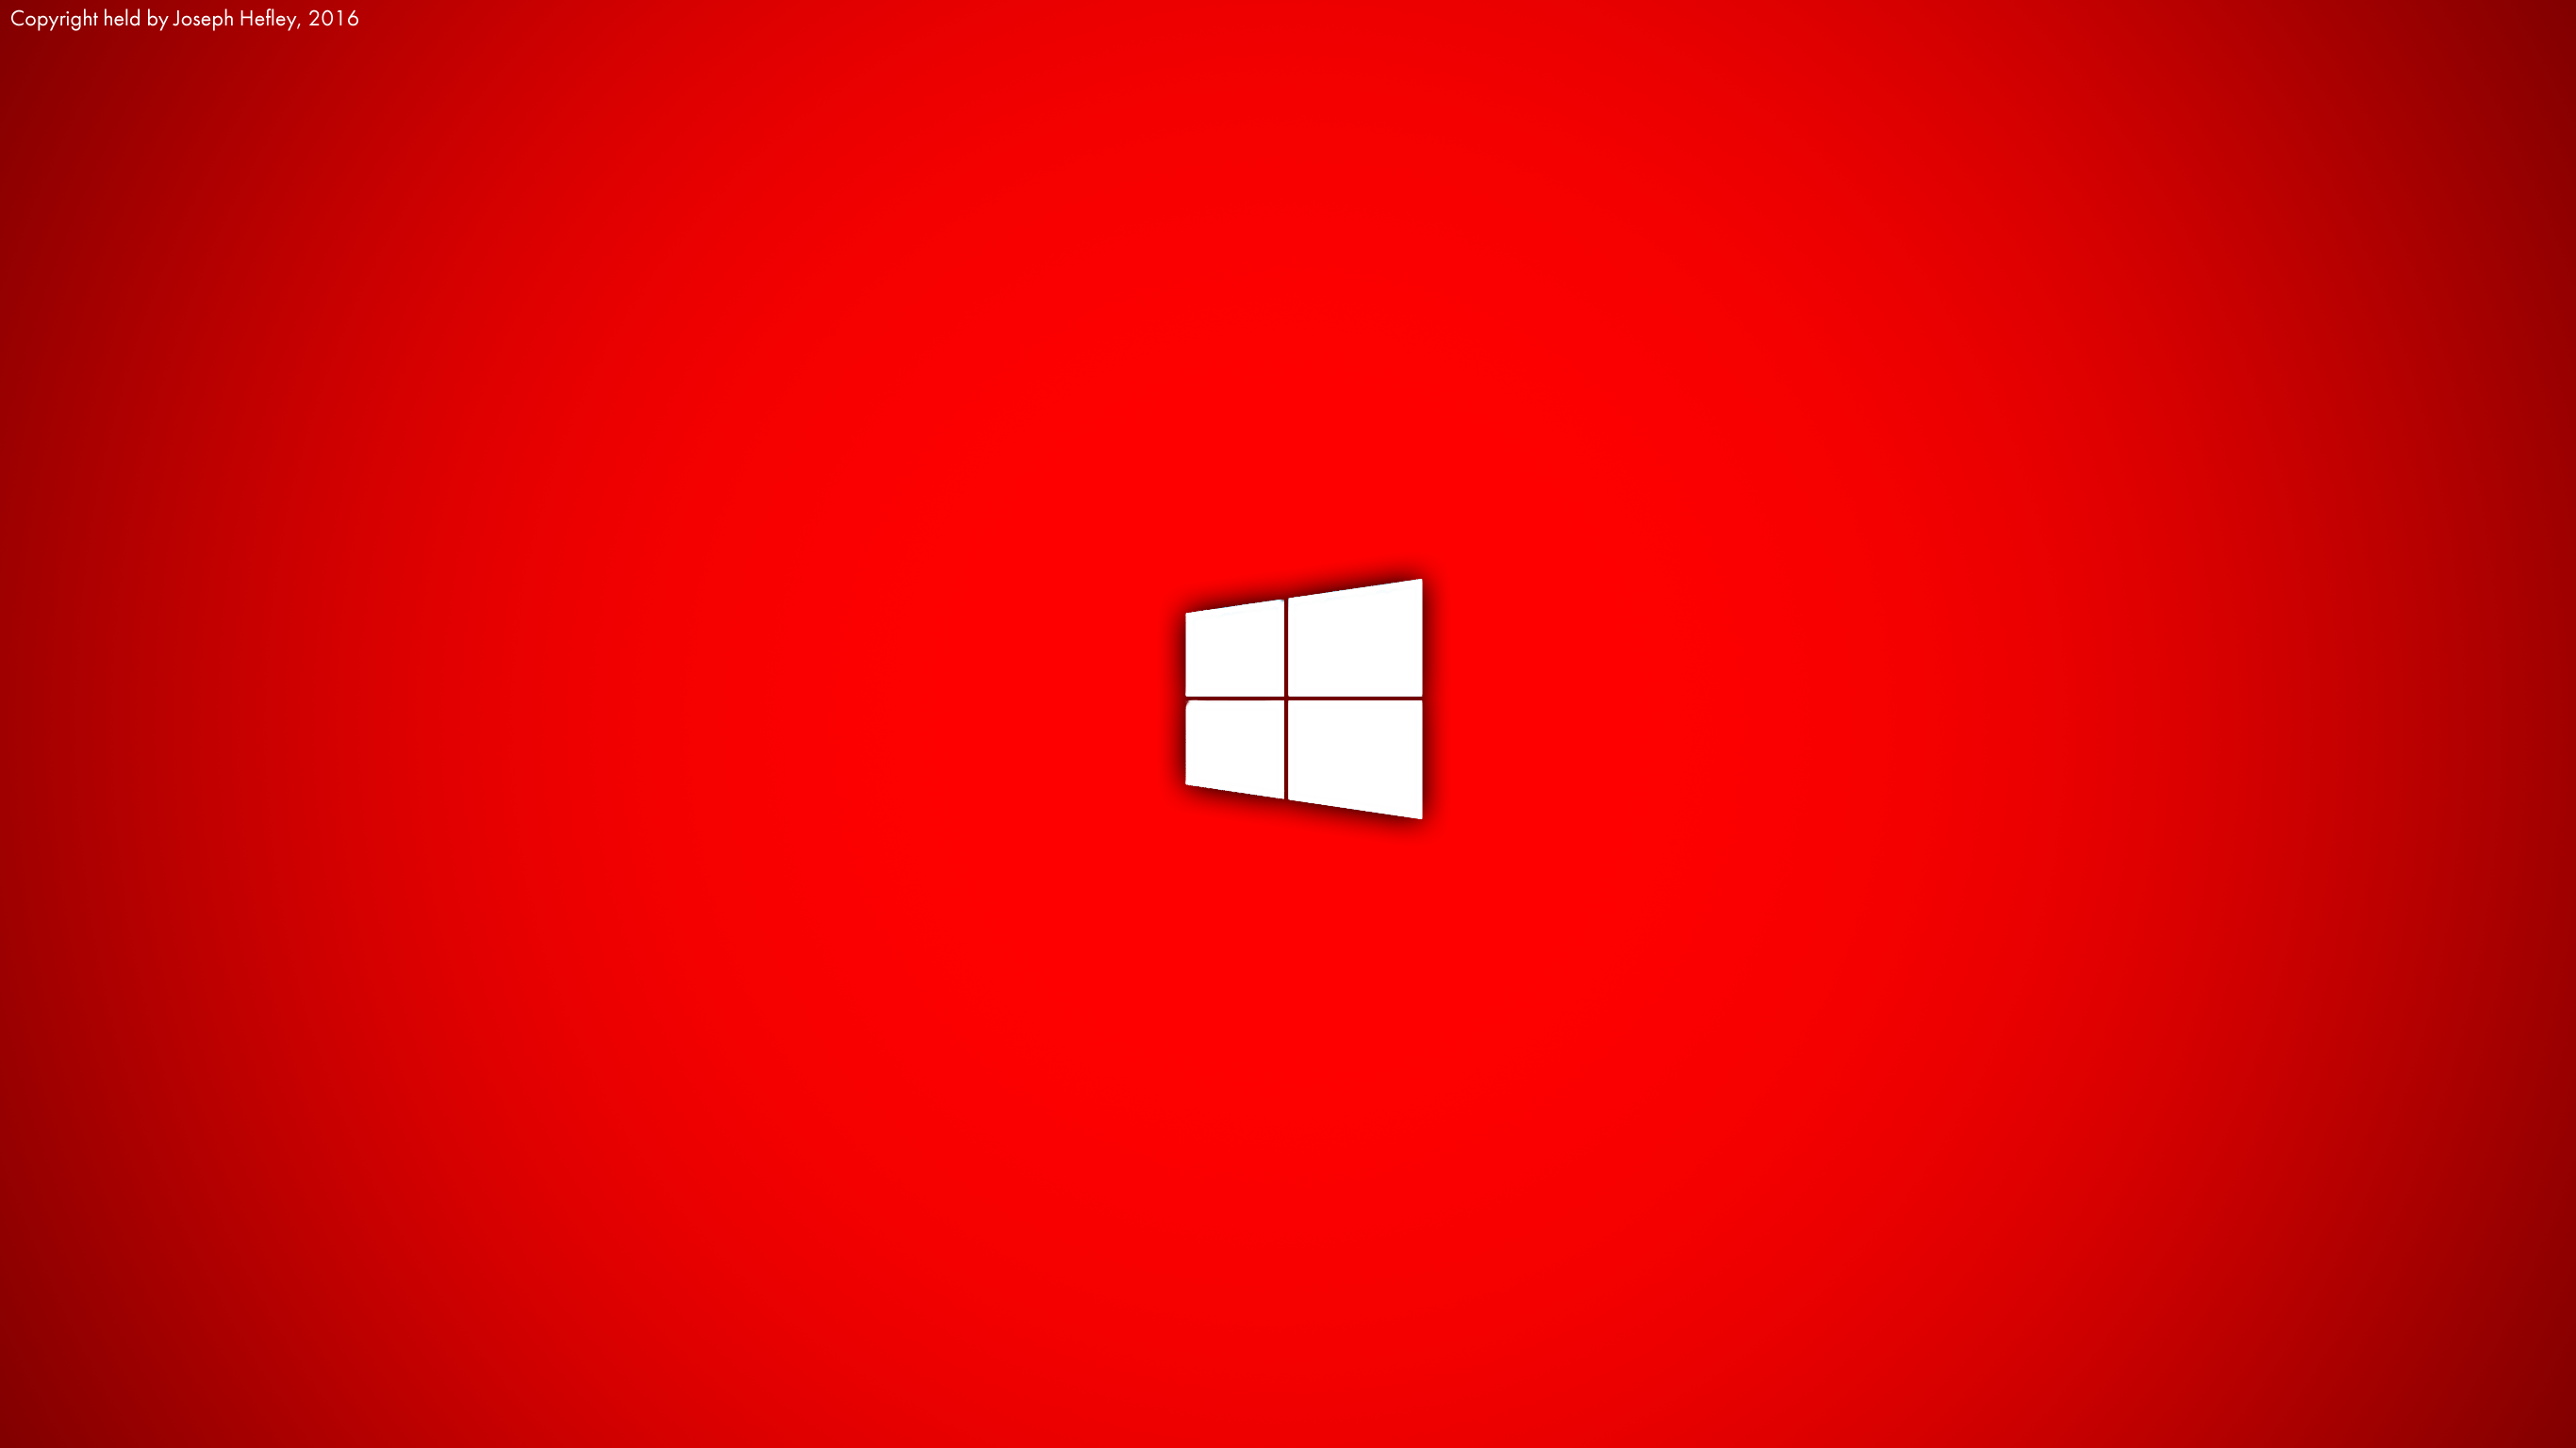 SL:866 Red Wallpaper Windows 10 Wallpaper: Red